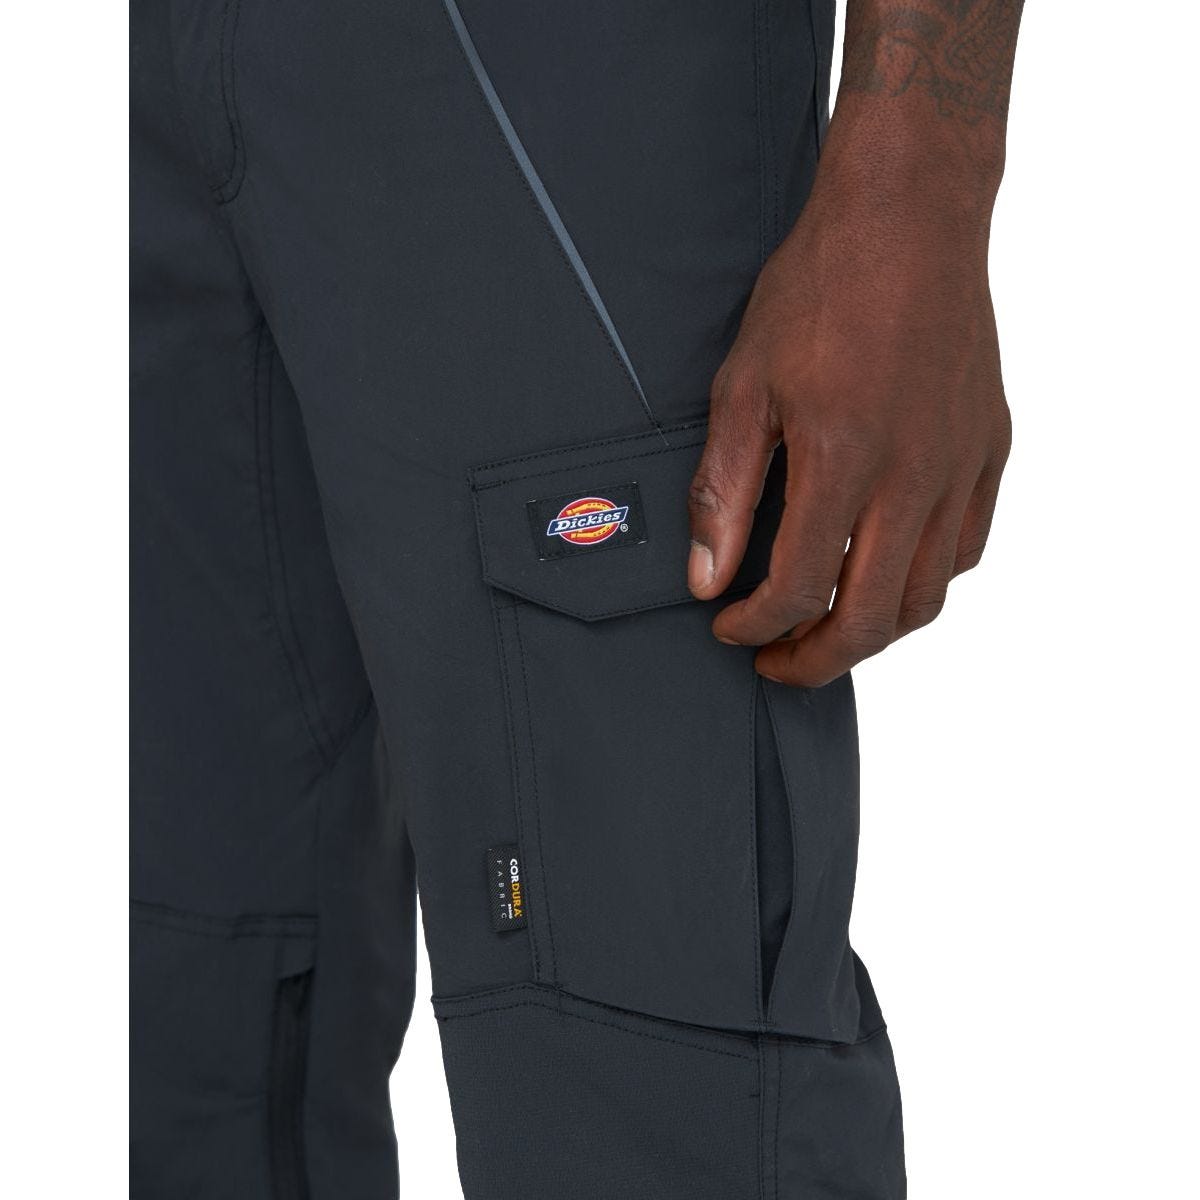 Pantalon léger Flex Noir - Dickies - Taille 38 4